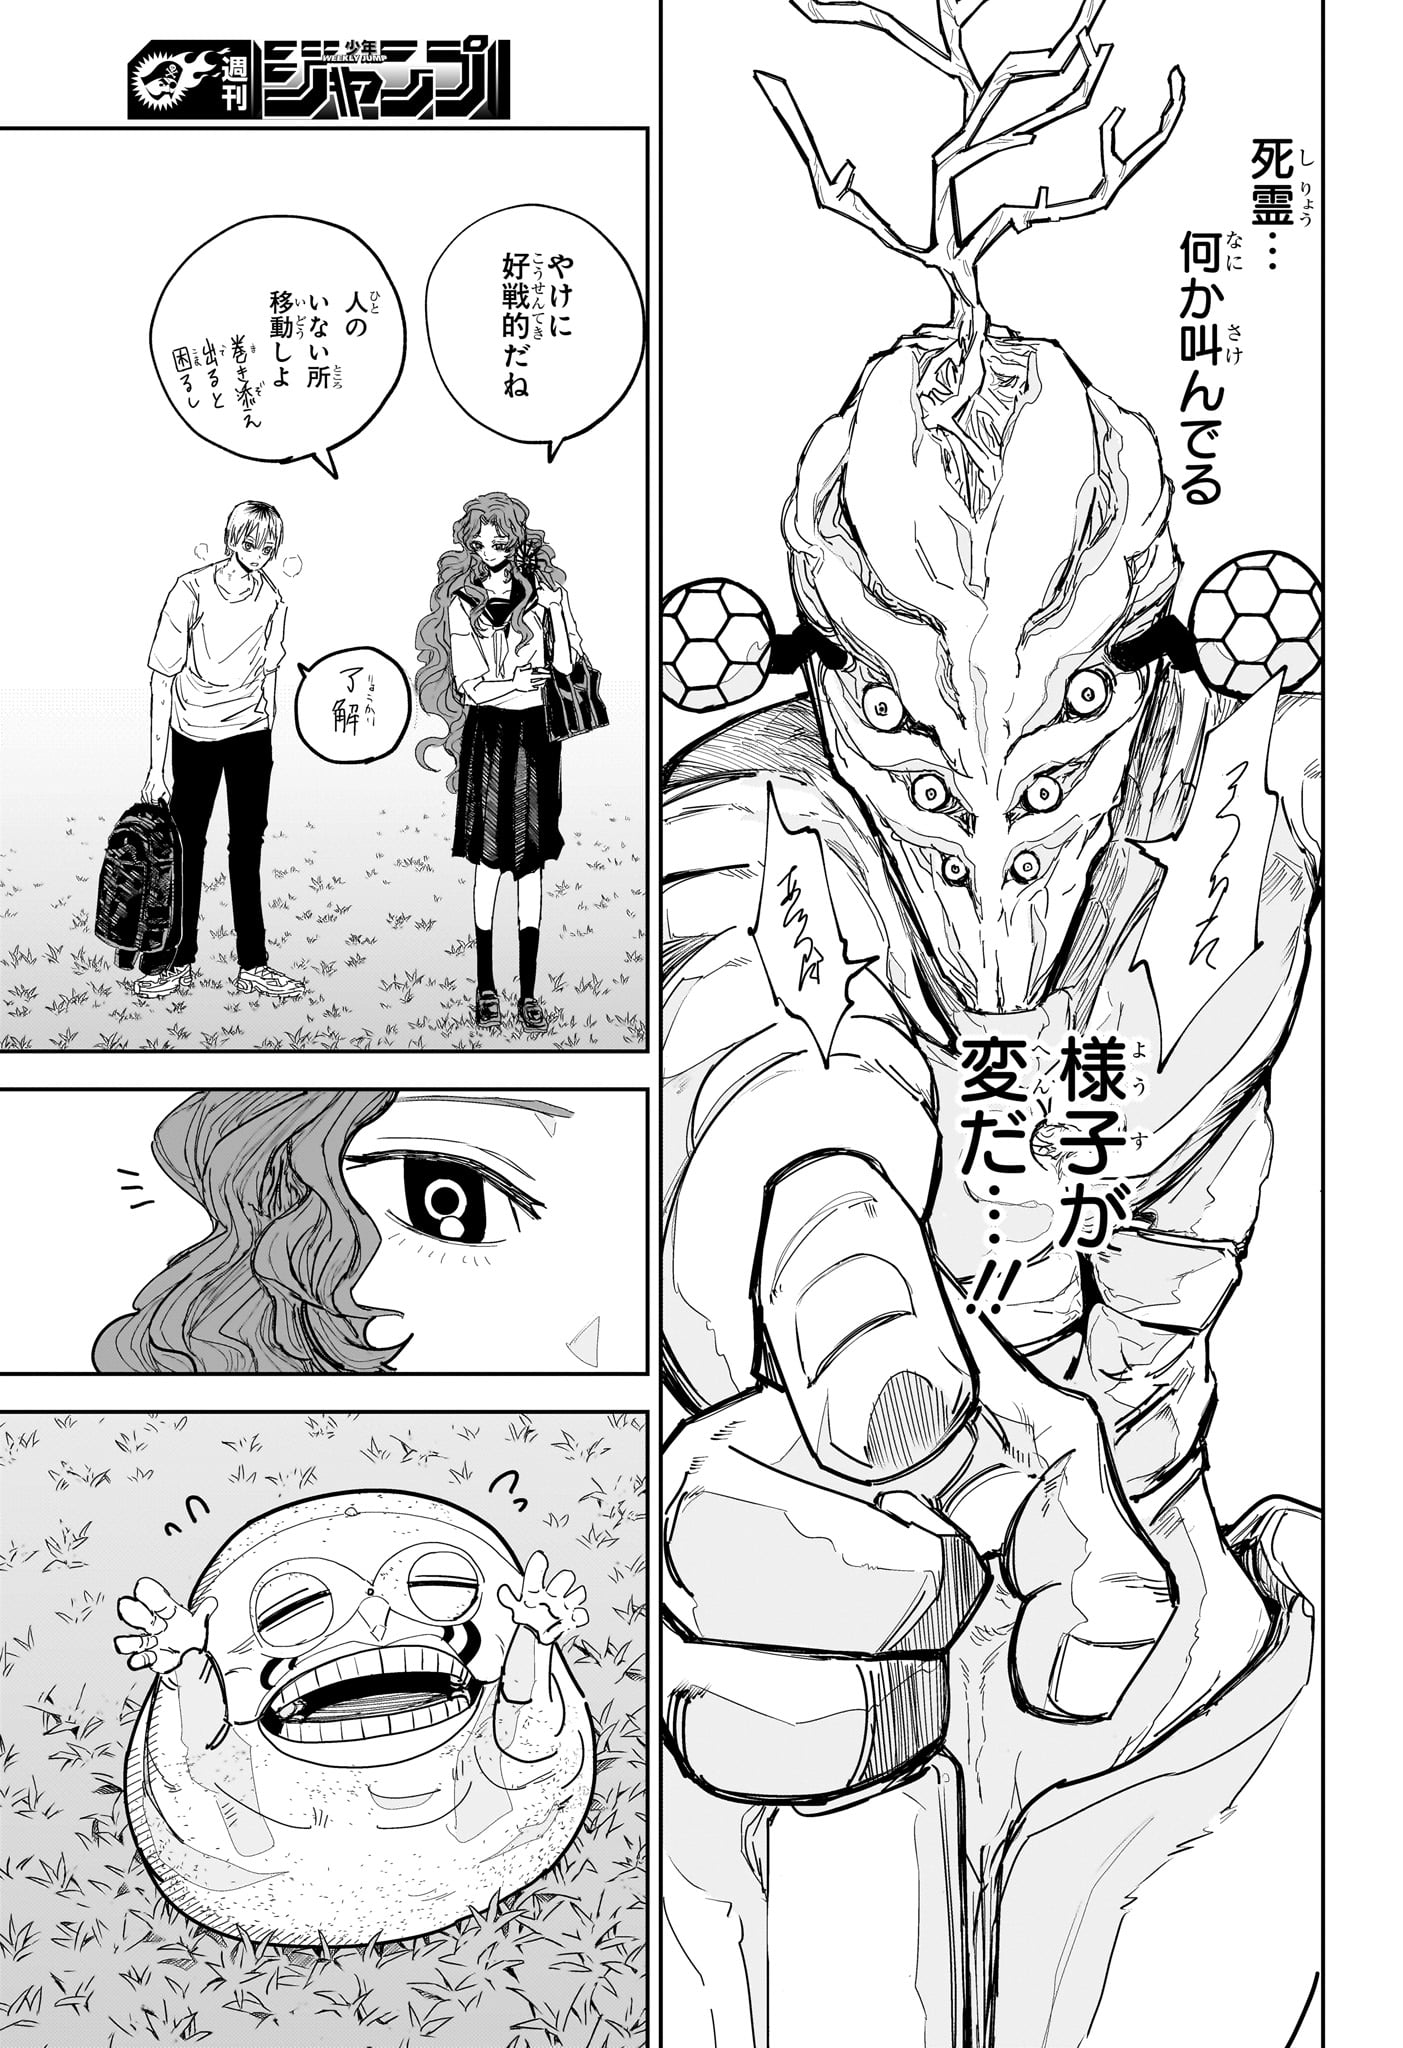 Kyokuto Necromance - Chapter 8 - Page 3